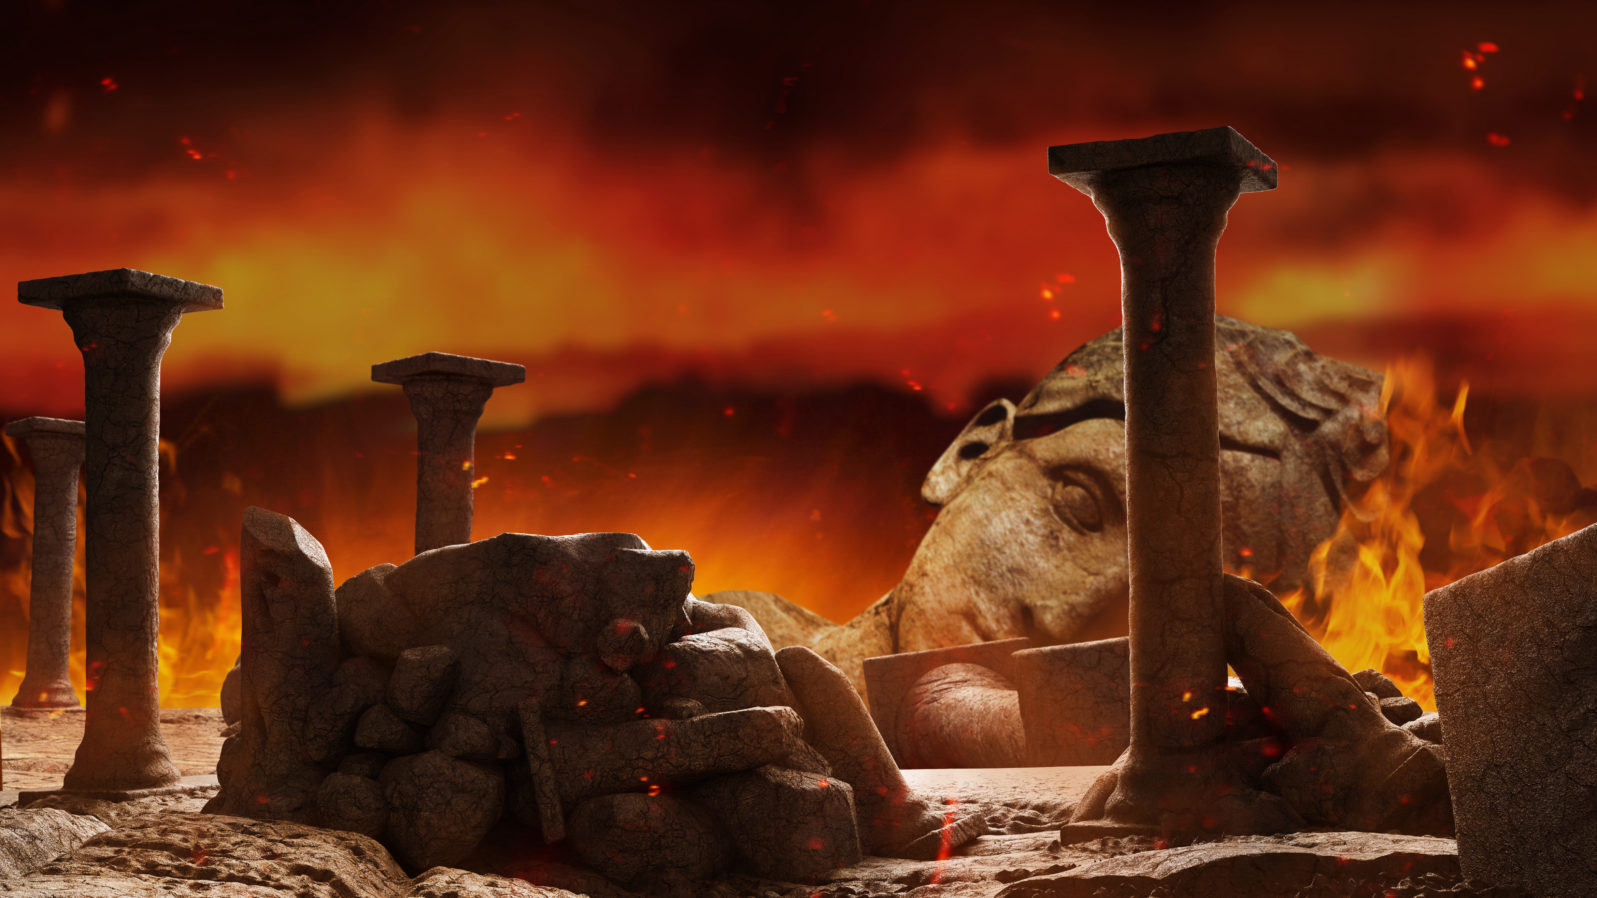 3d render background illustration of ancient greek temple ruins with female goddess statue, rocks and columns burning on dark war backdrop.